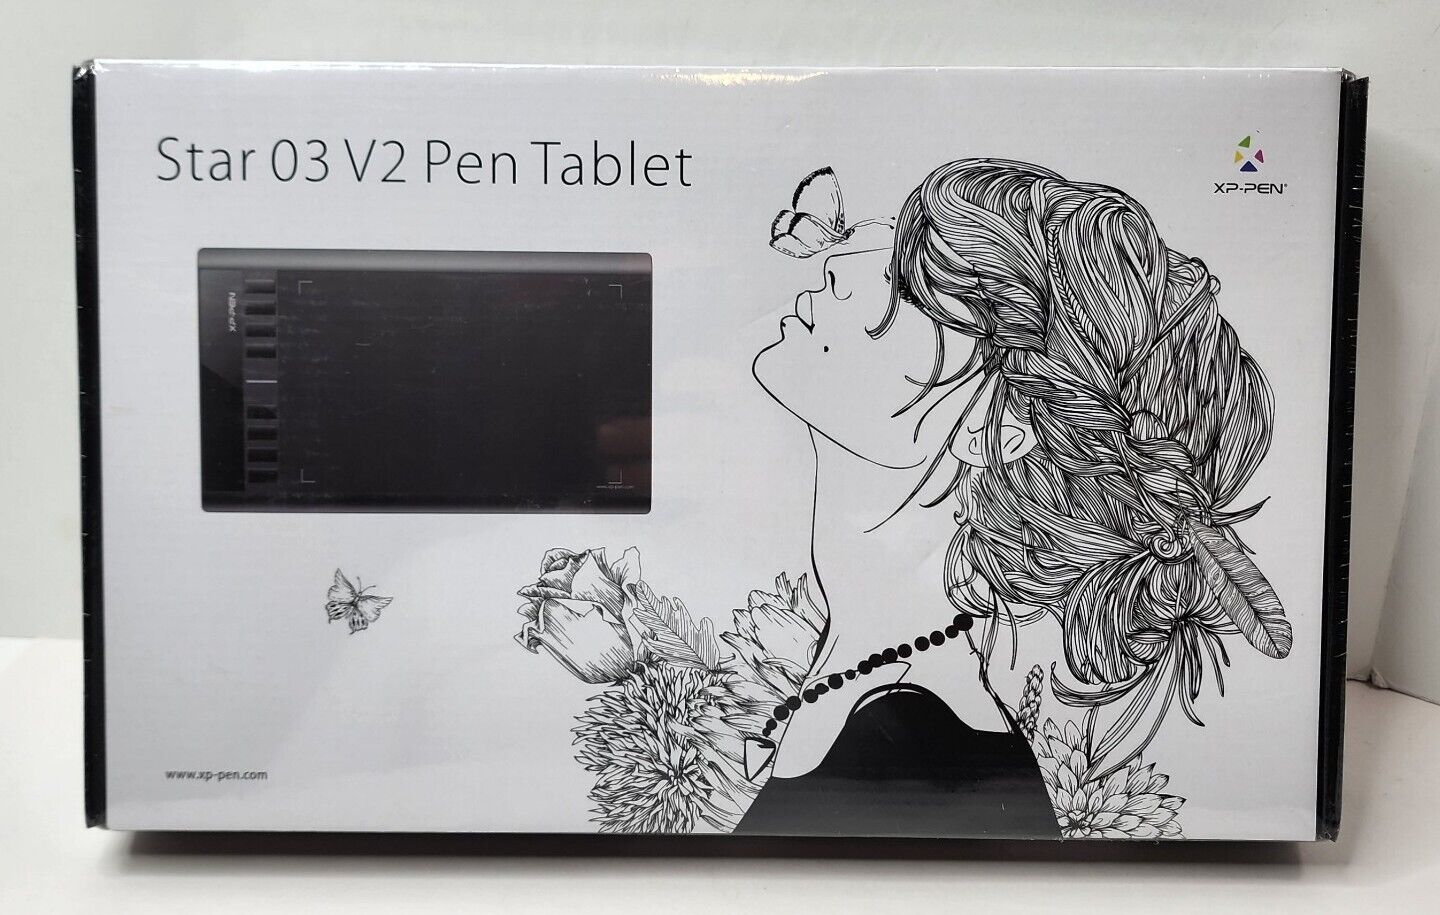 XP-Pen - Star 03 V2 Pen Tablet - 10x6 Inch Drawing Tablet - New/Sealed